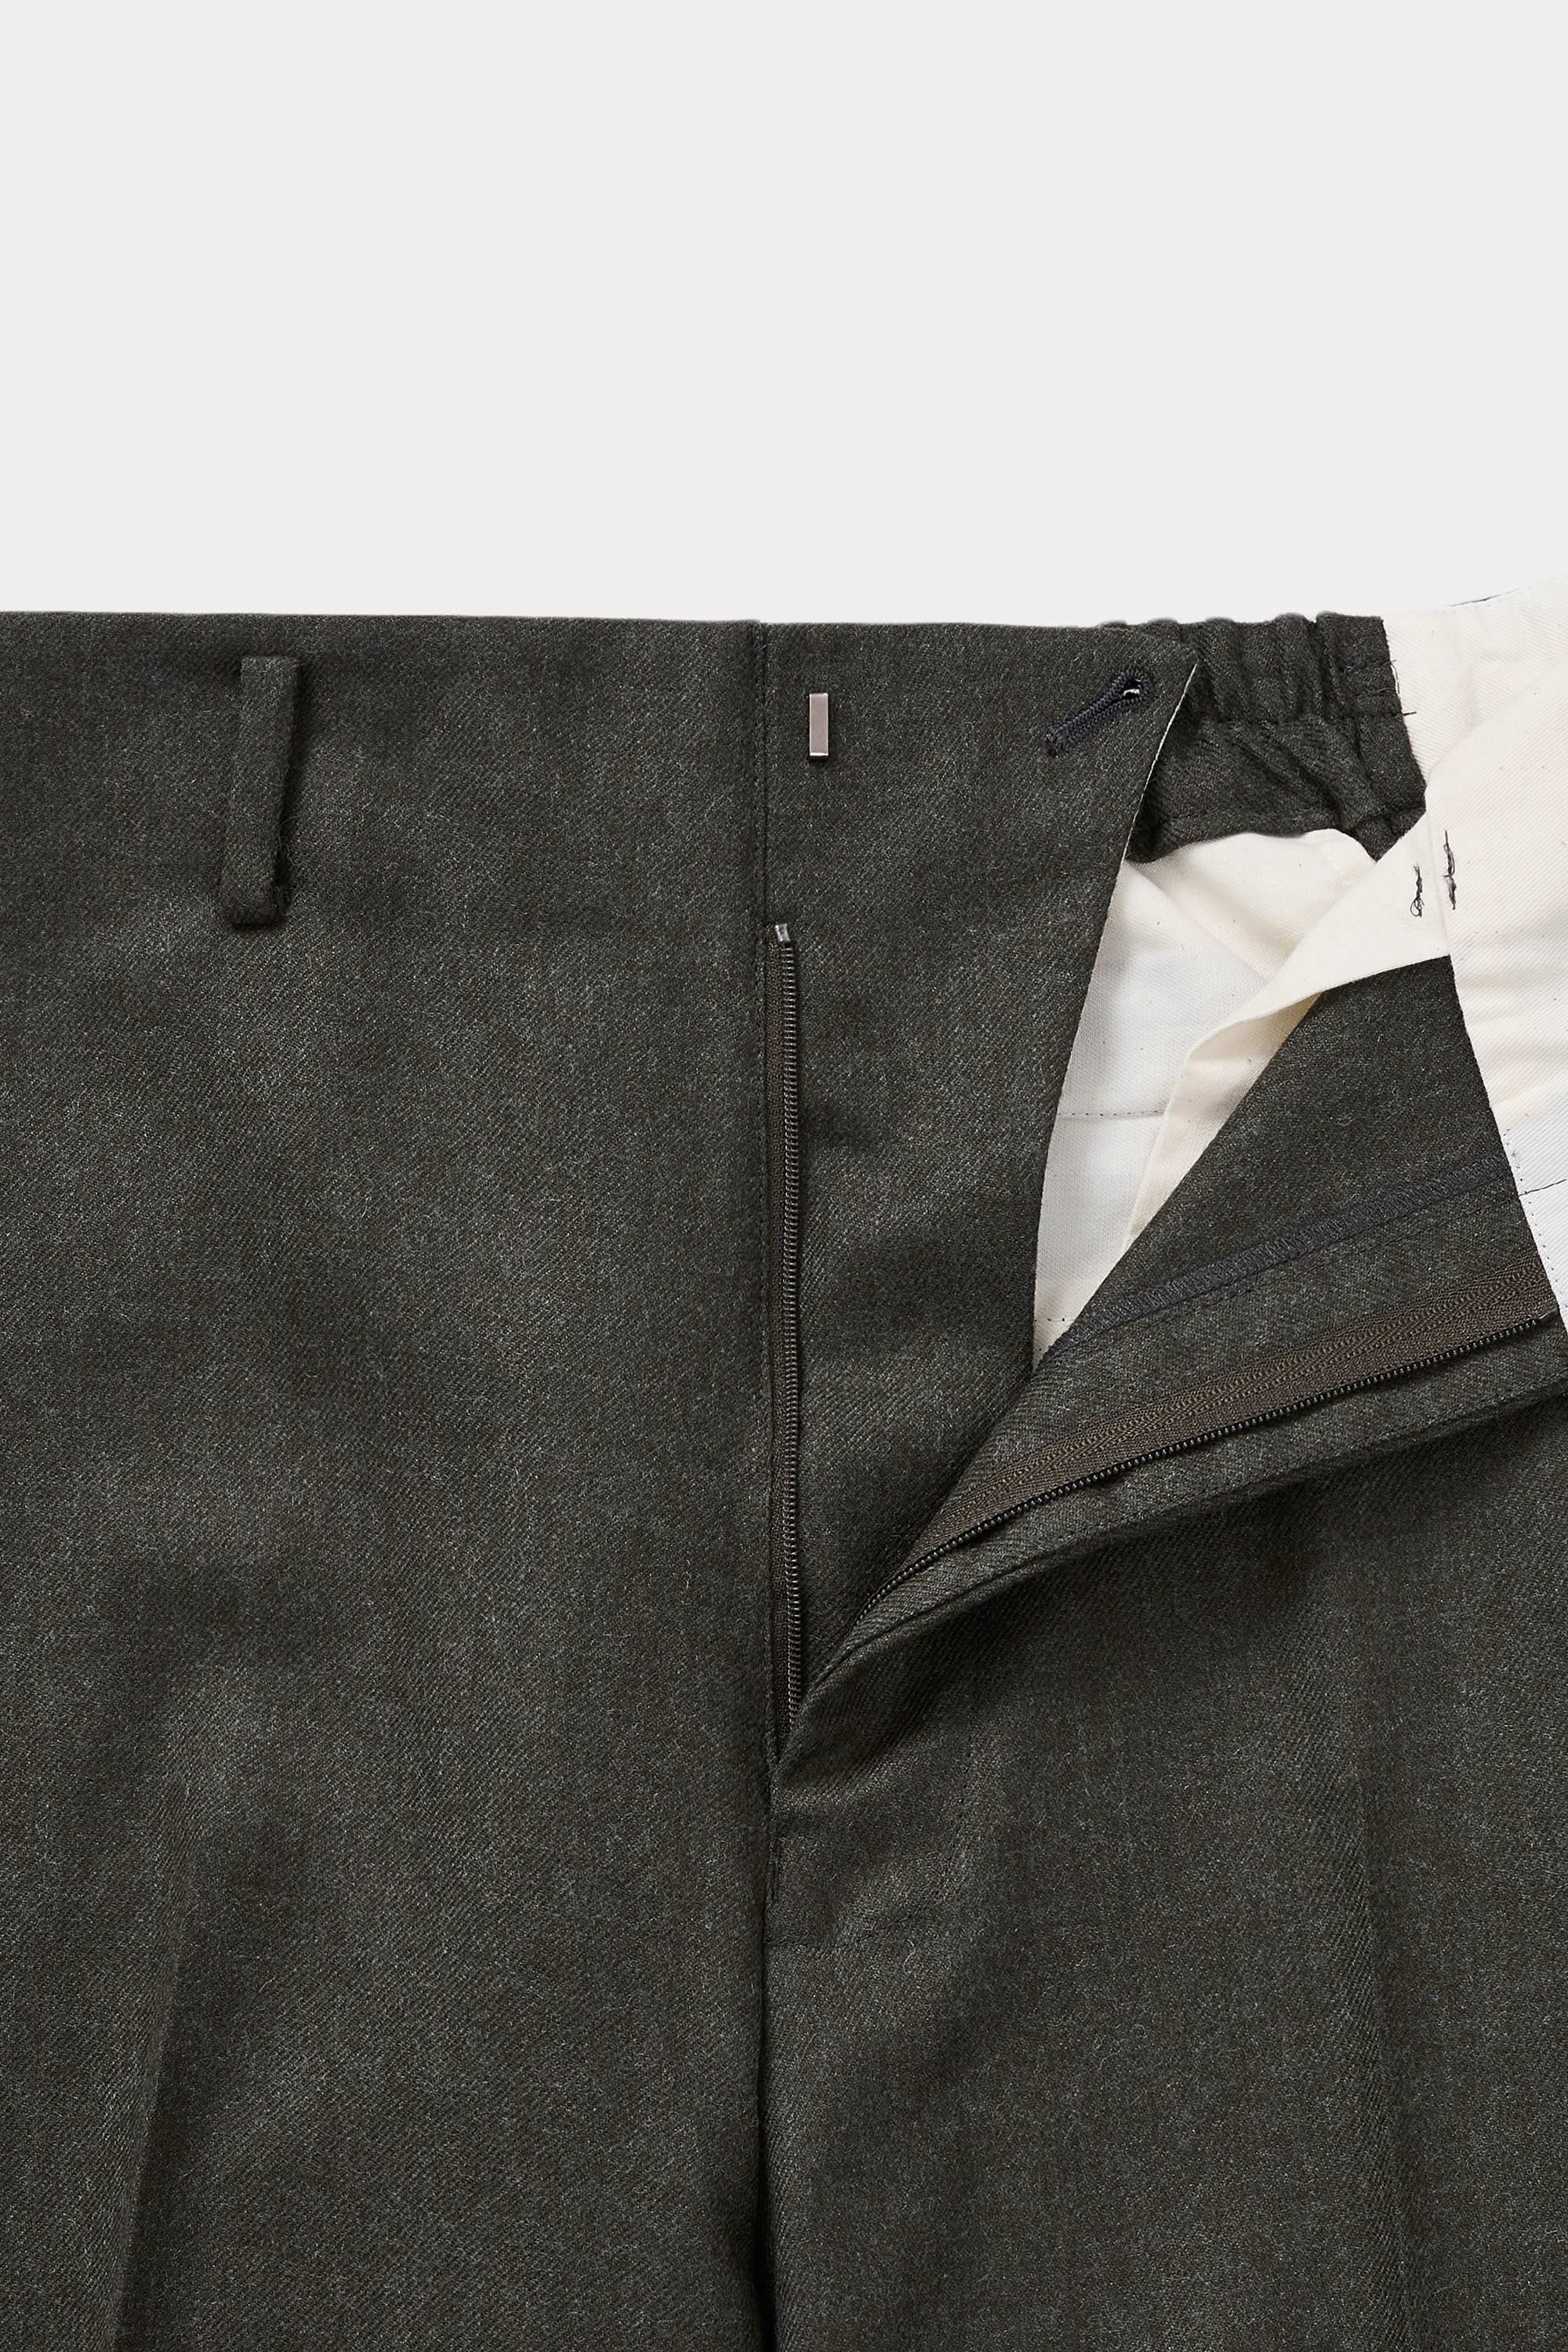 2/48 Wool Soft Serge Stitchless Trousers, Black